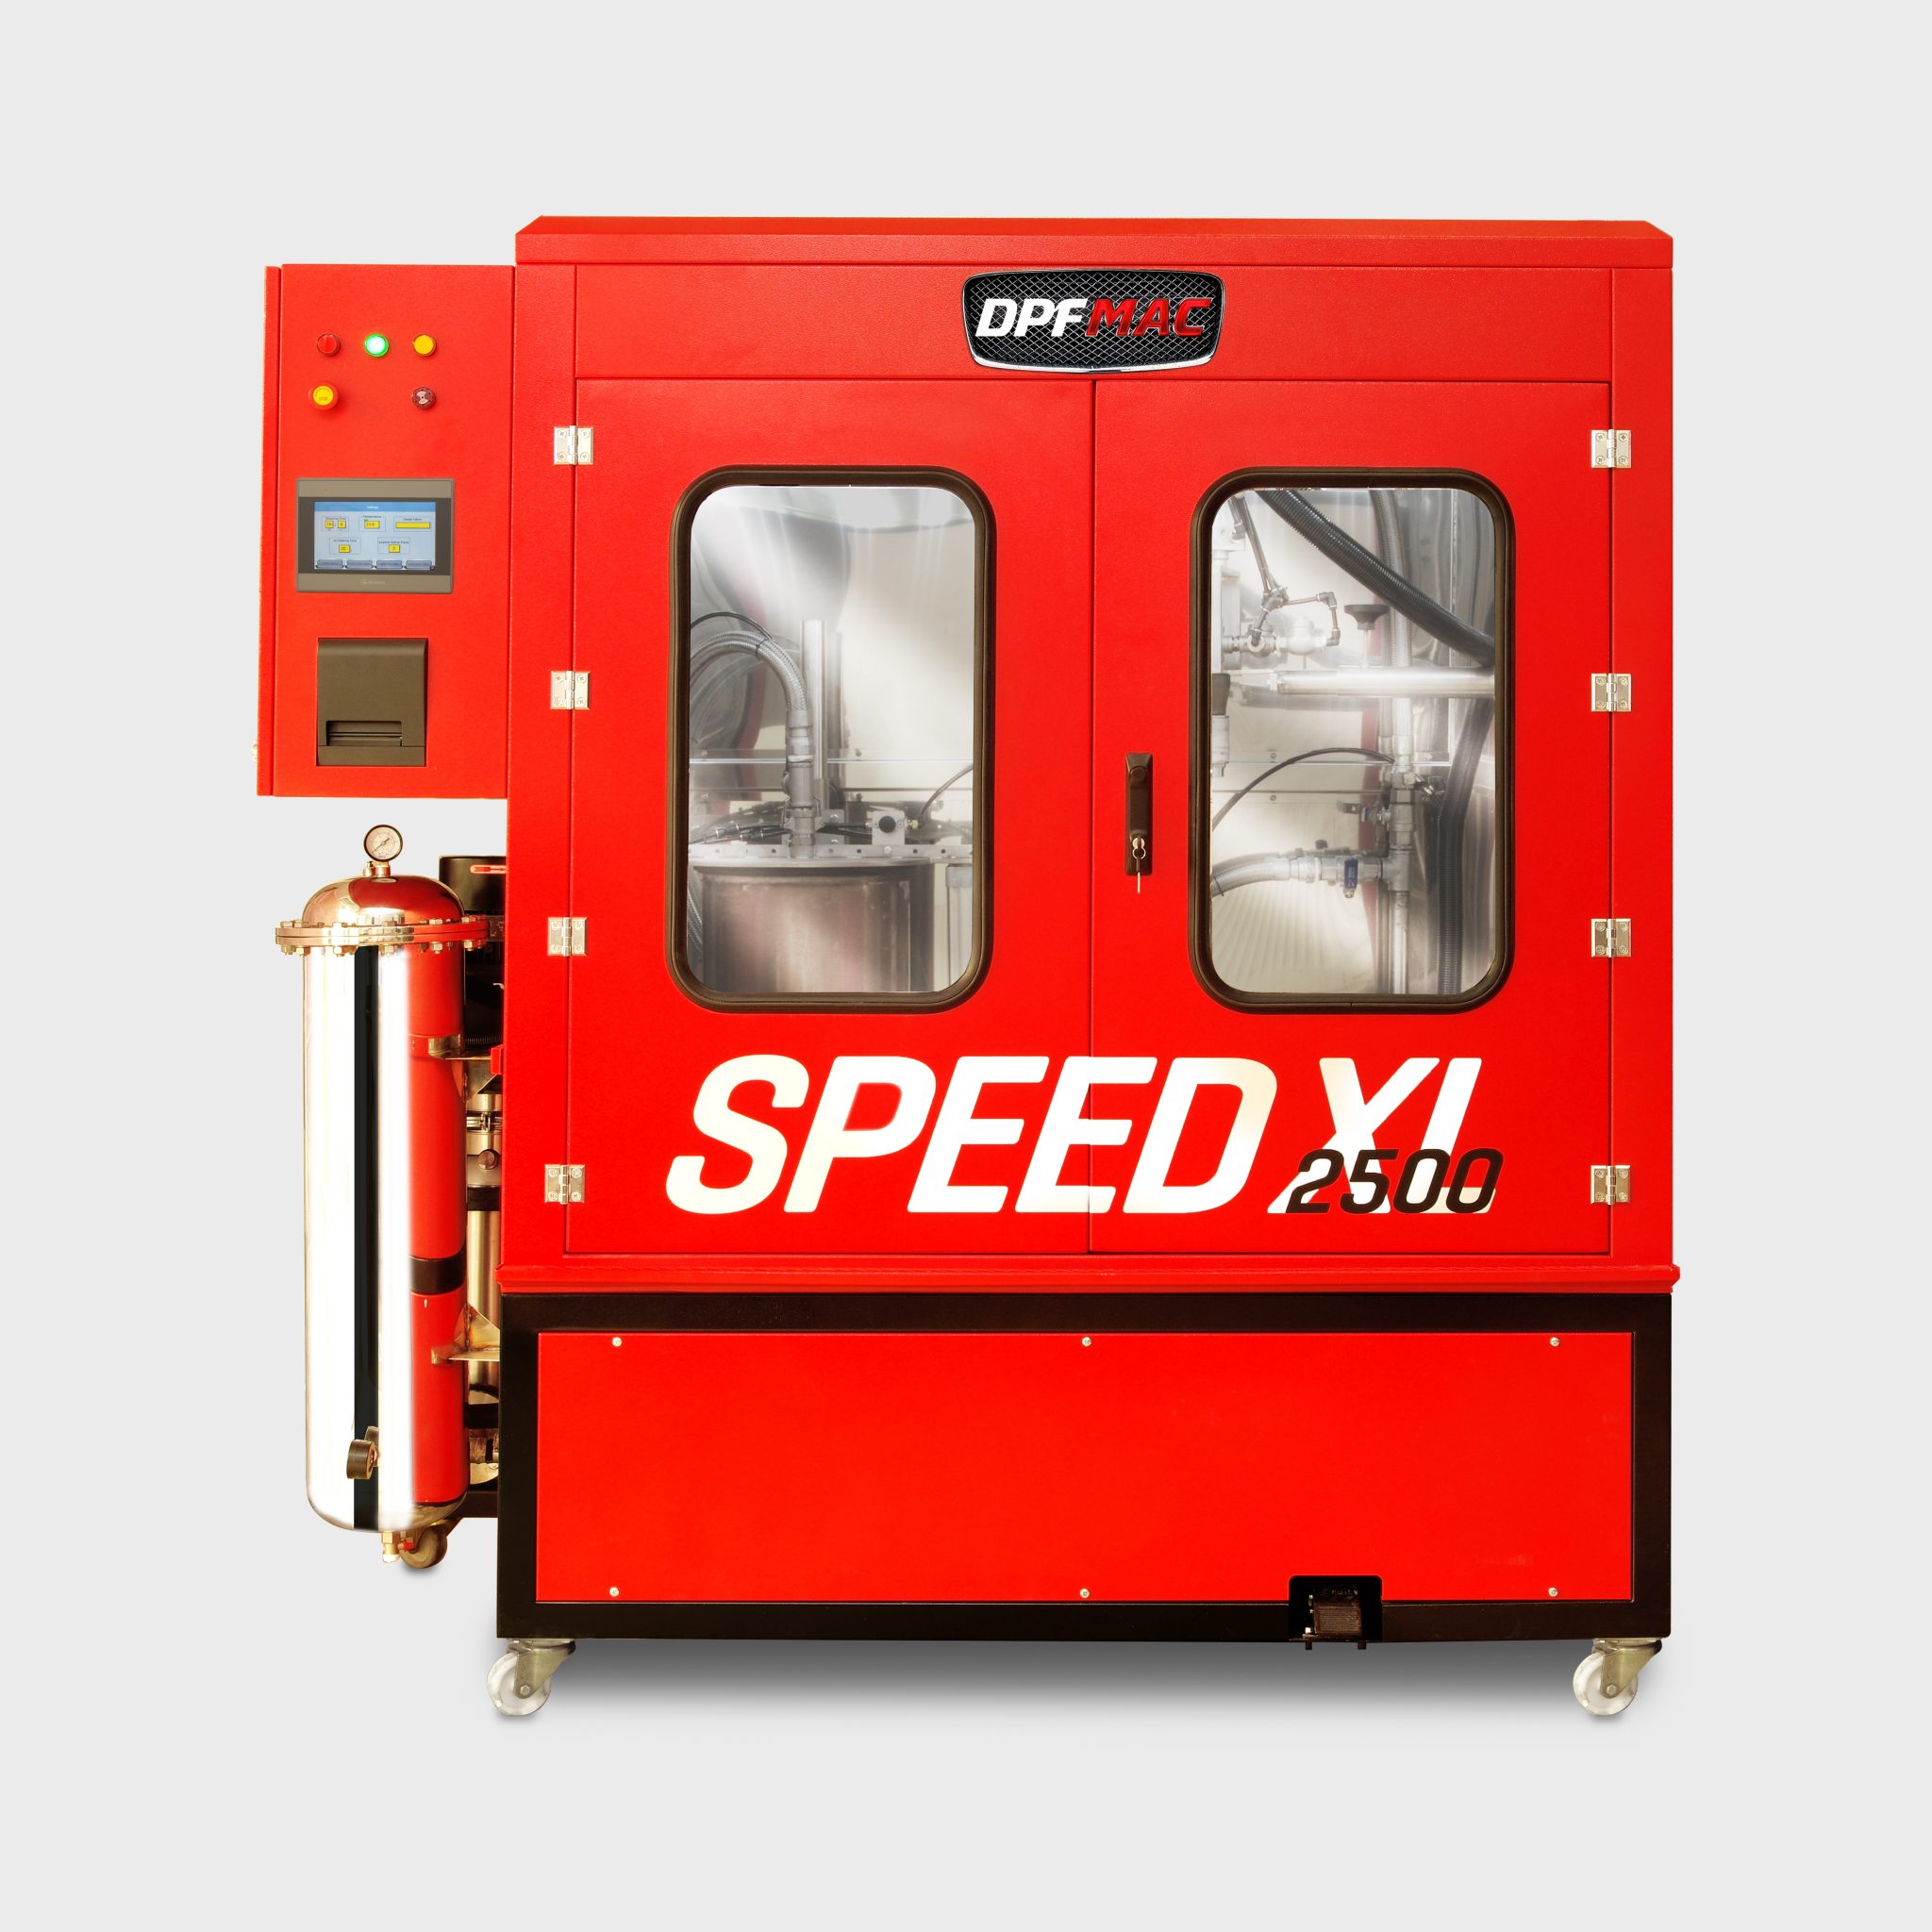 Dpfmac Speed XL 2500